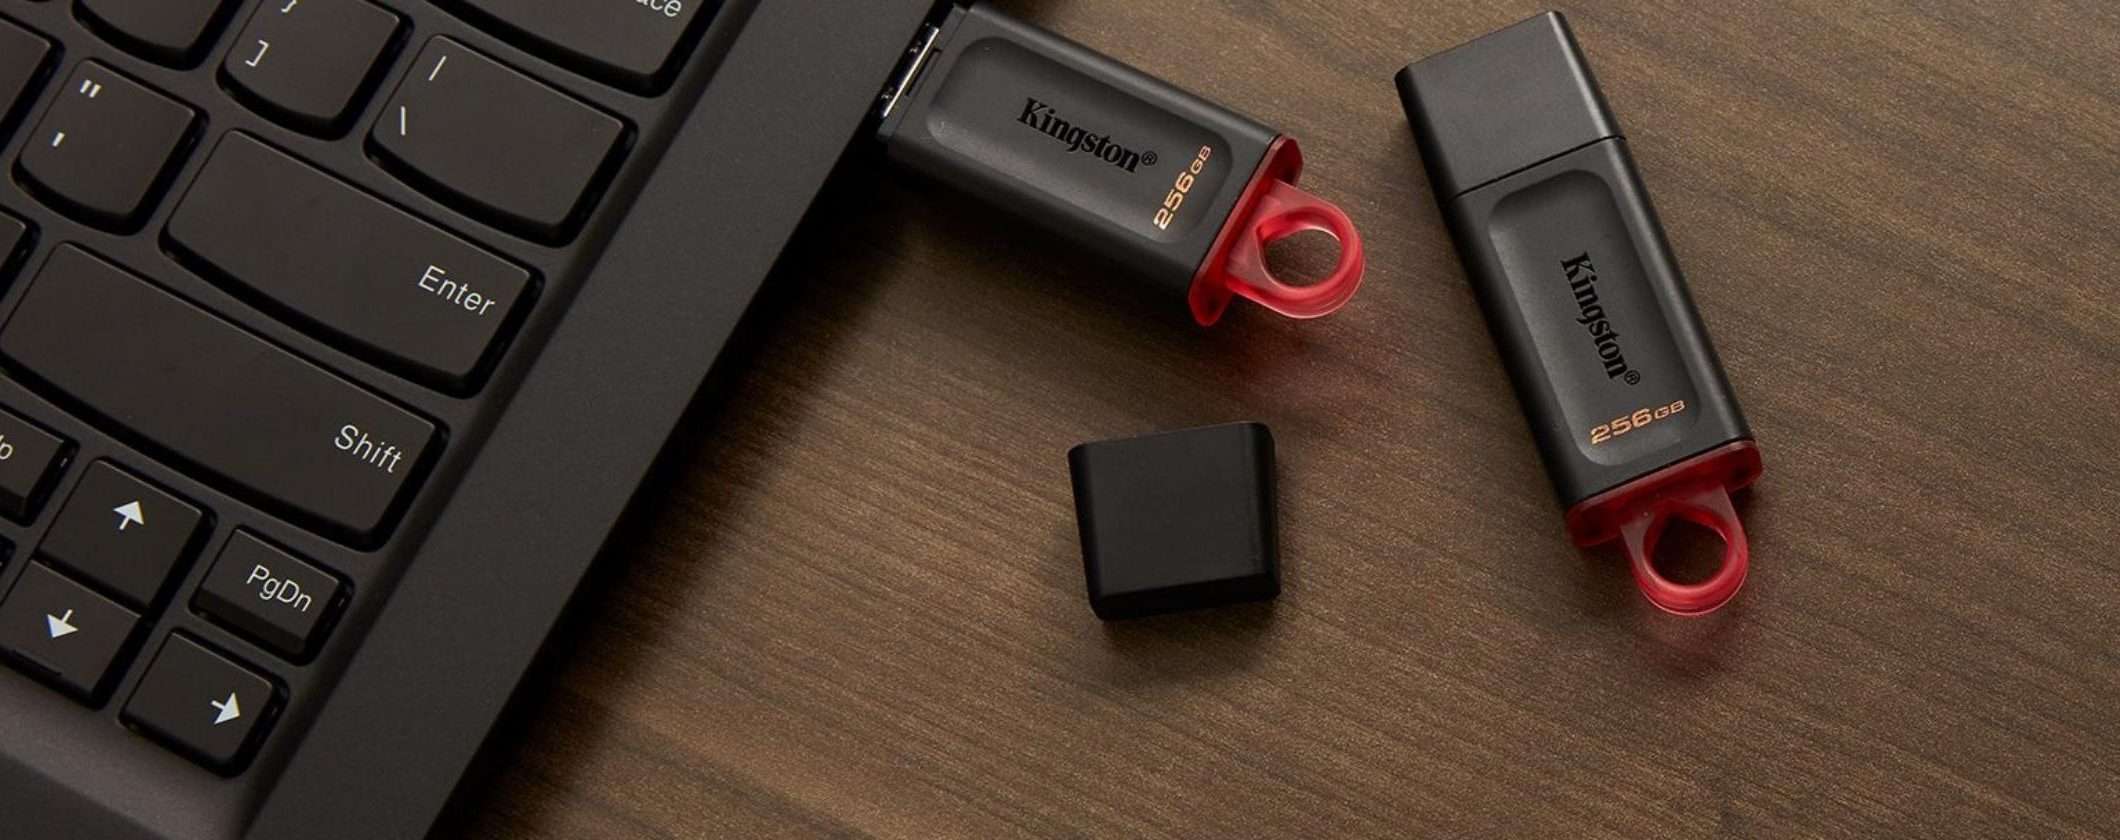 Chiavetta USB Kingston 128GB: tanta capienza e super RISPARMIO